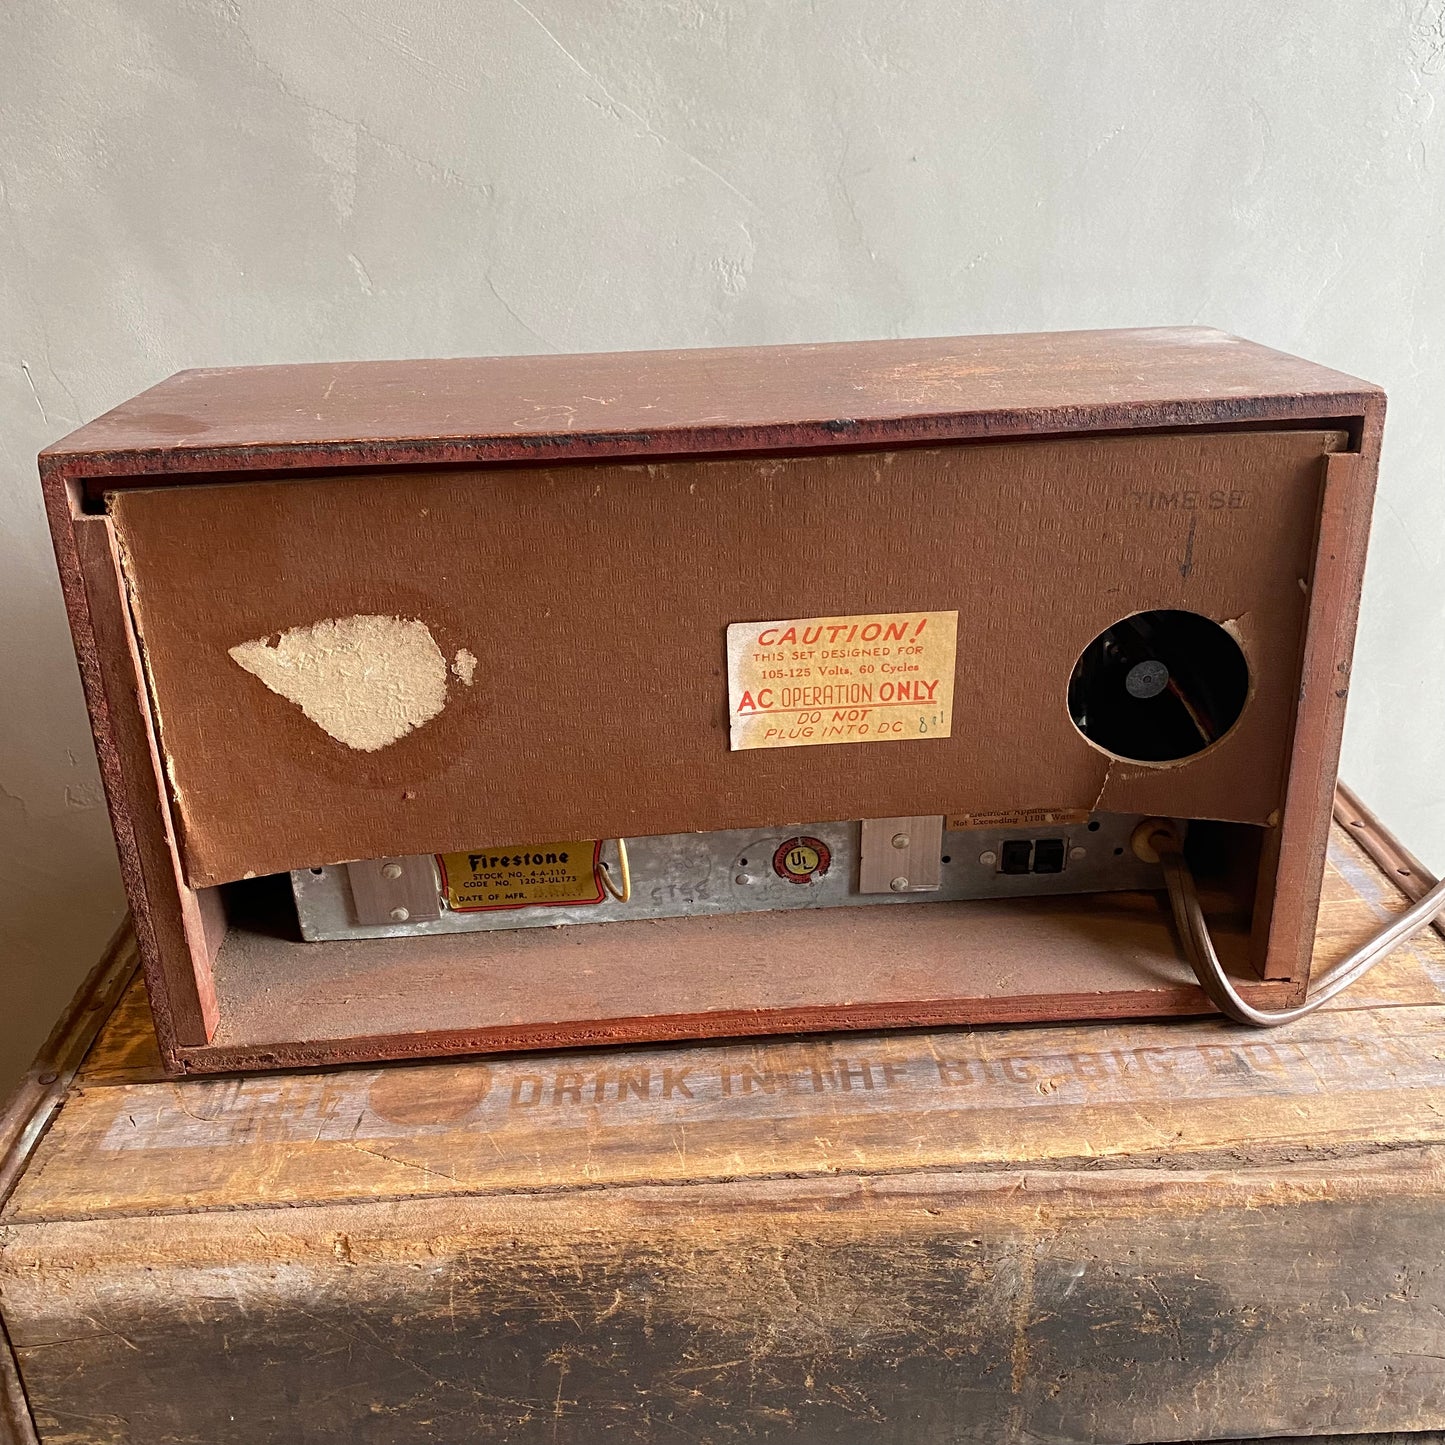 【USA vintage】Firestone 真空管ラジオ